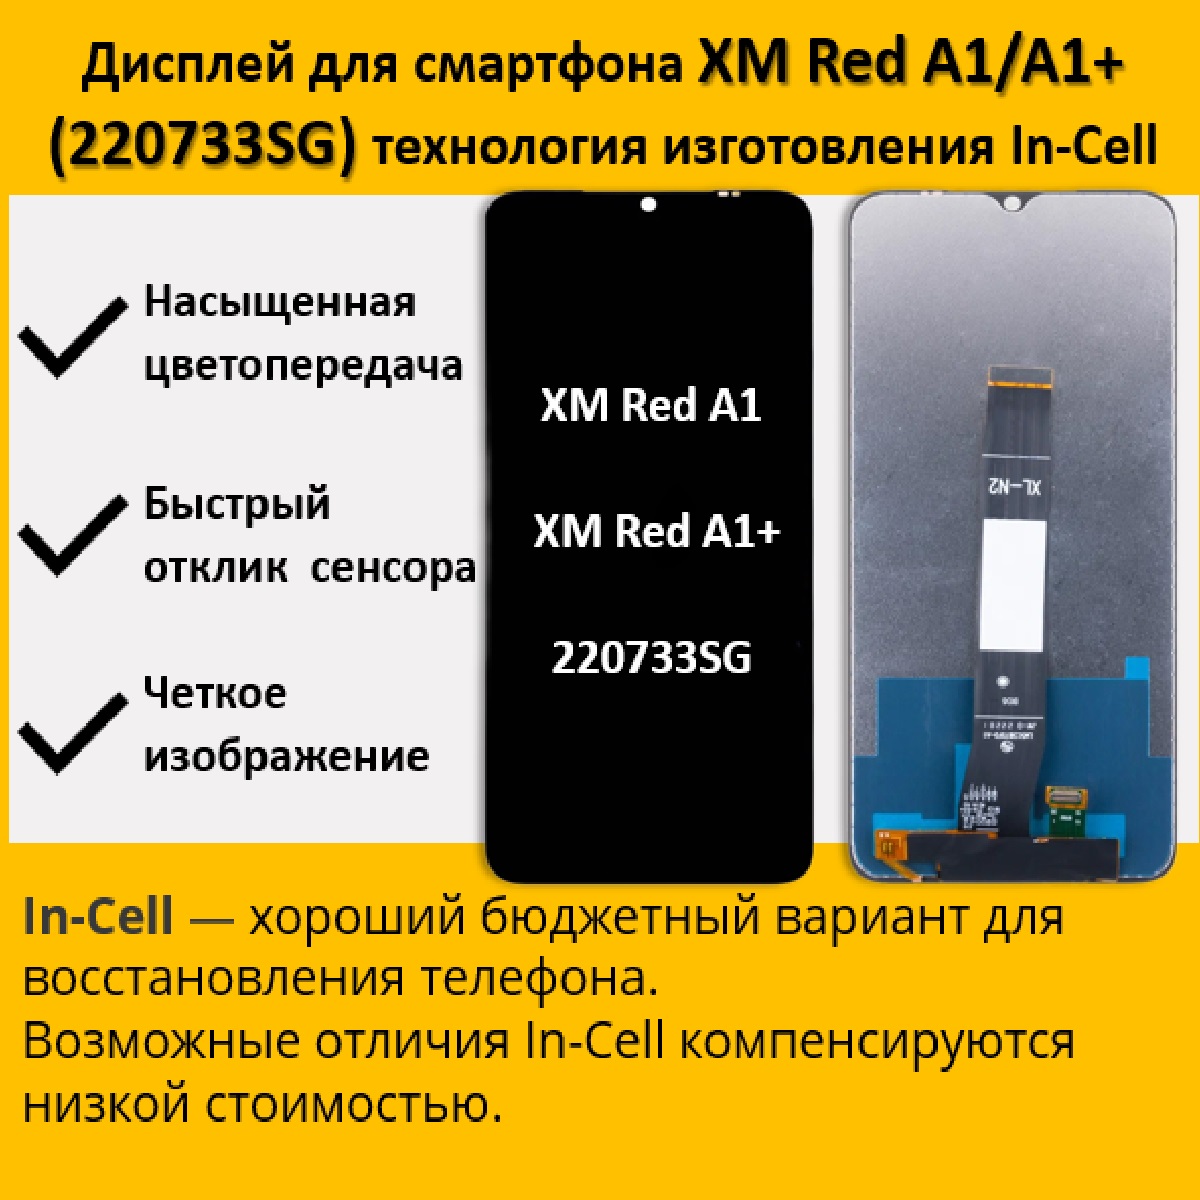 Дисплей для cмартфона Xiaomi Redmi A1/A1+ (220733SG), технология In-Cell